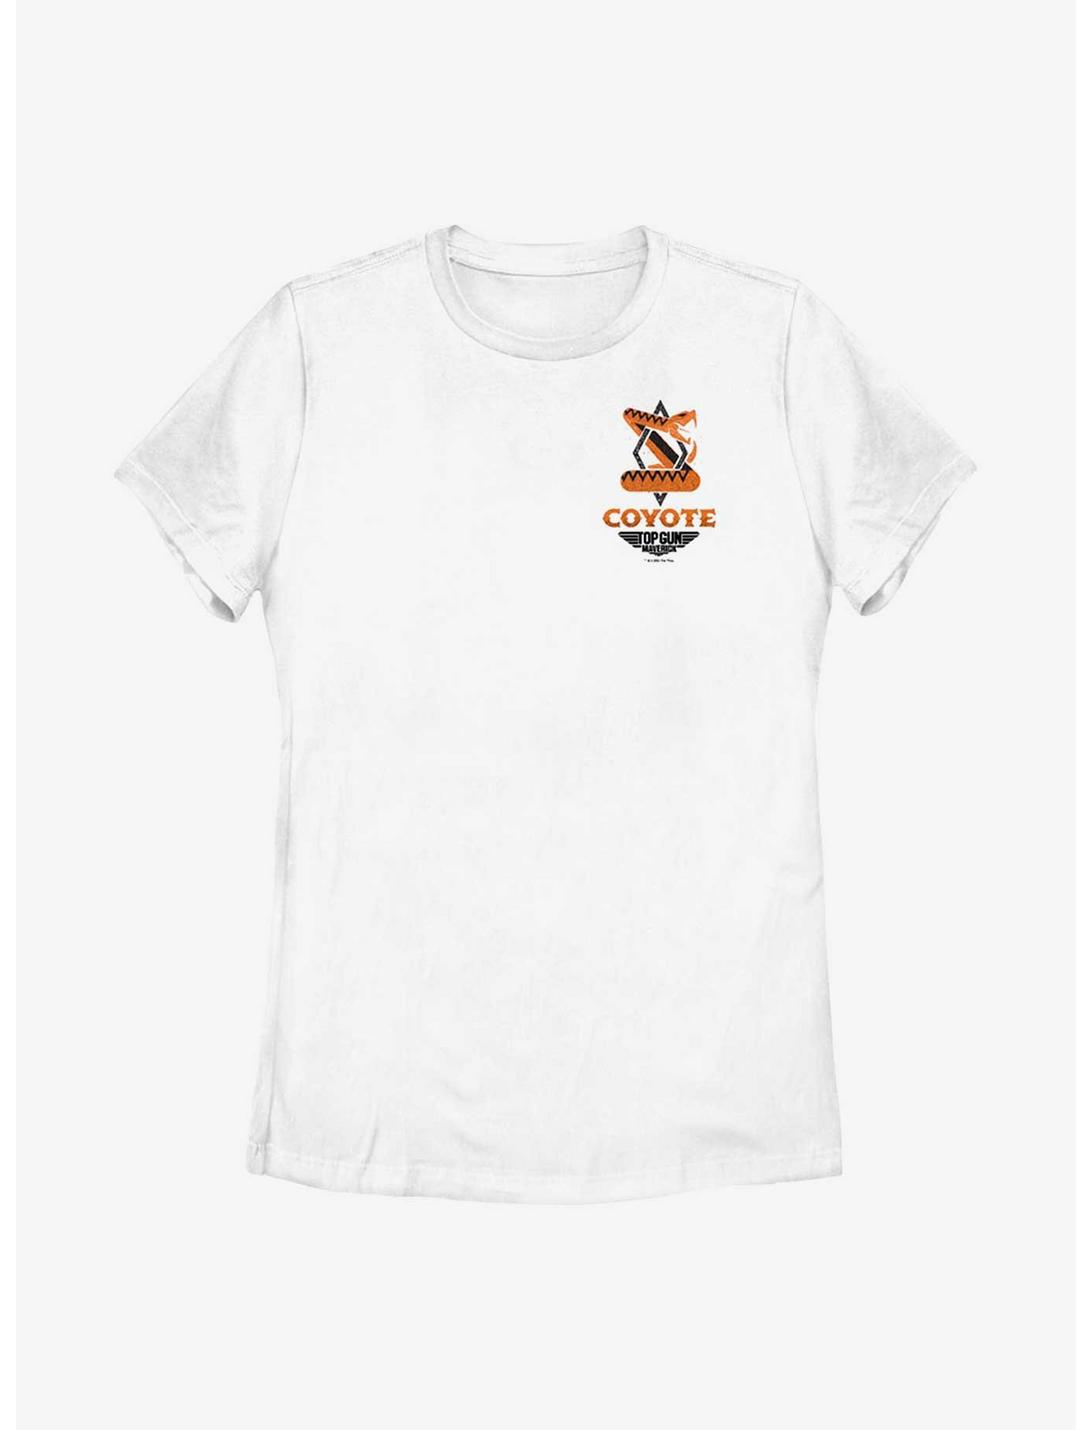 Top Gun: Maverick Coyote Patch Womens T-Shirt, WHITE, hi-res